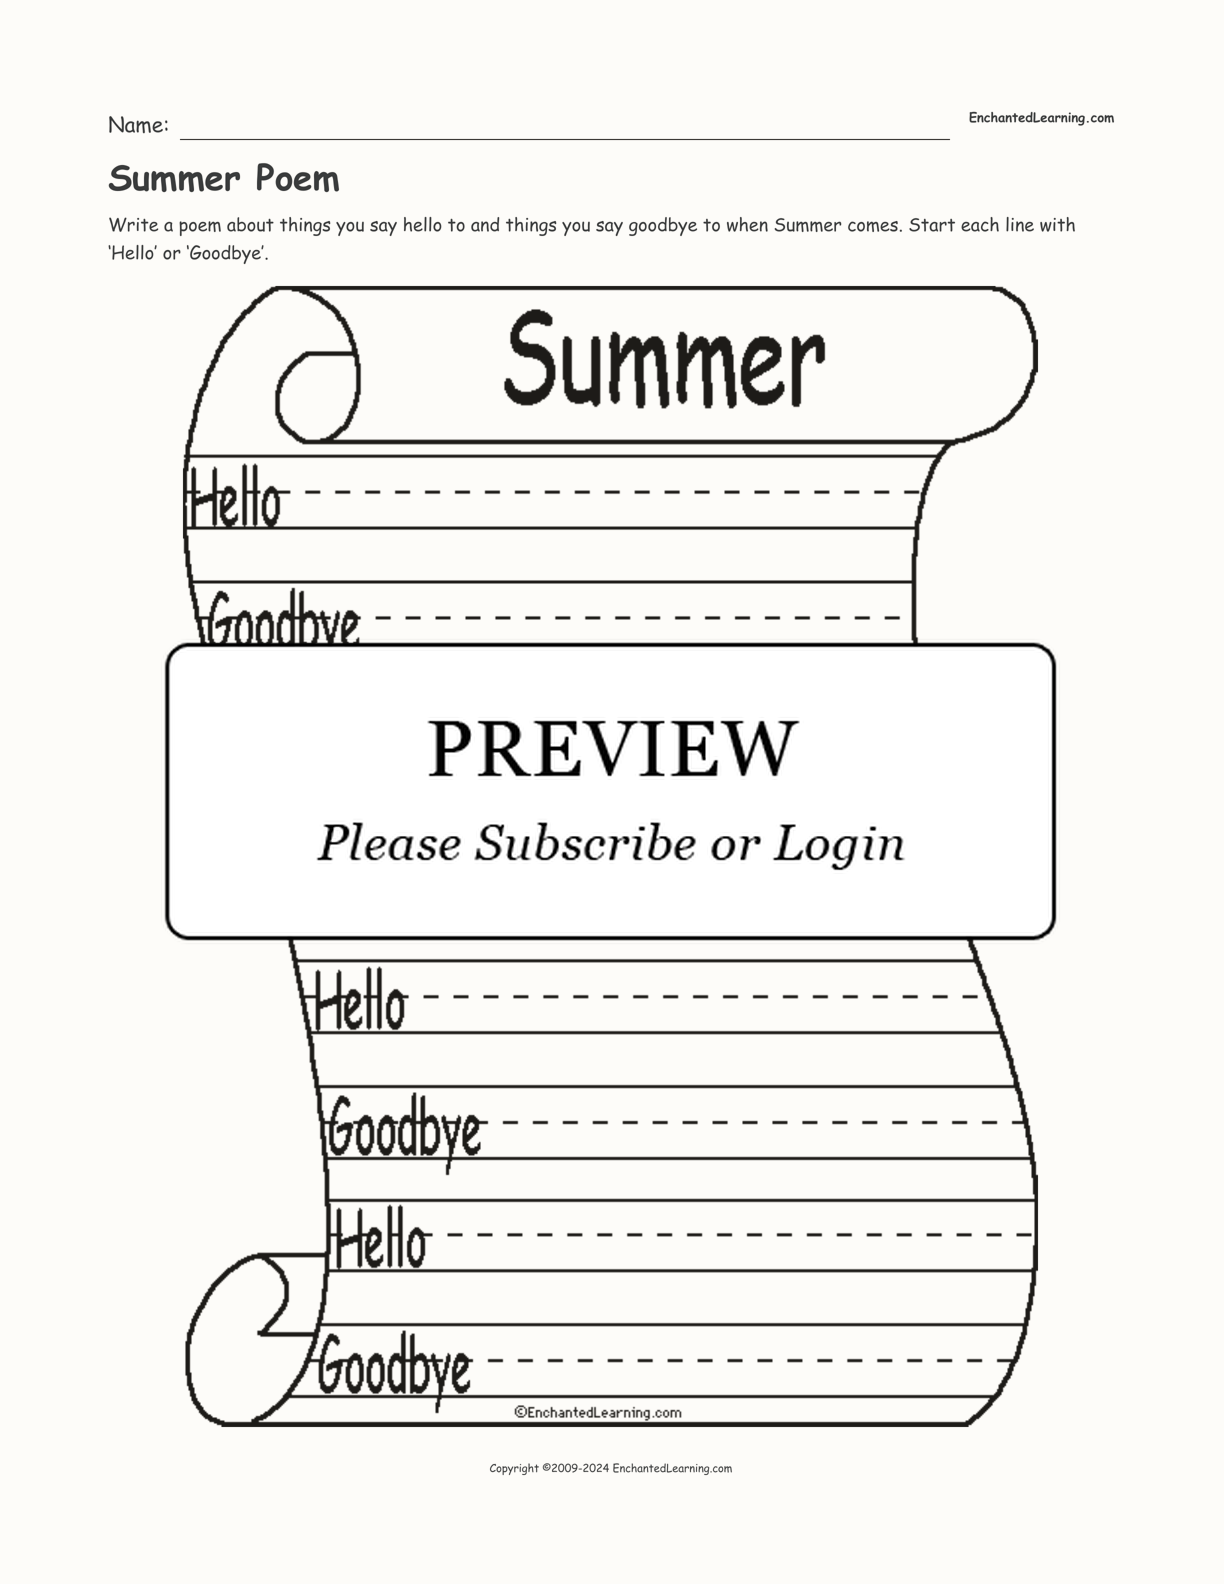 Summer Poem interactive worksheet page 1